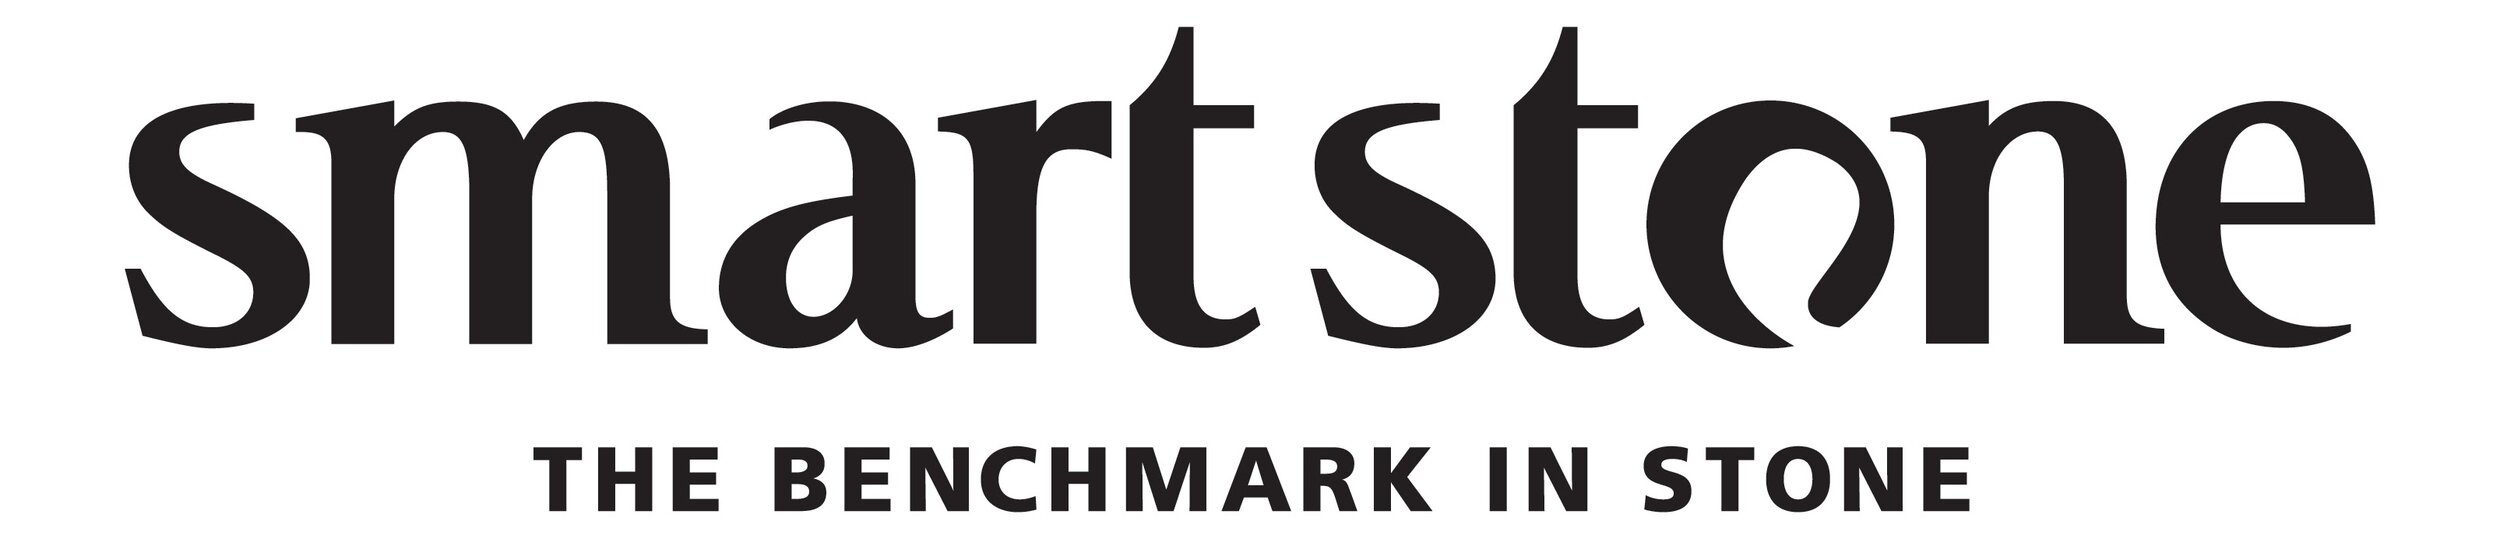 Smartstone-logo.jpg